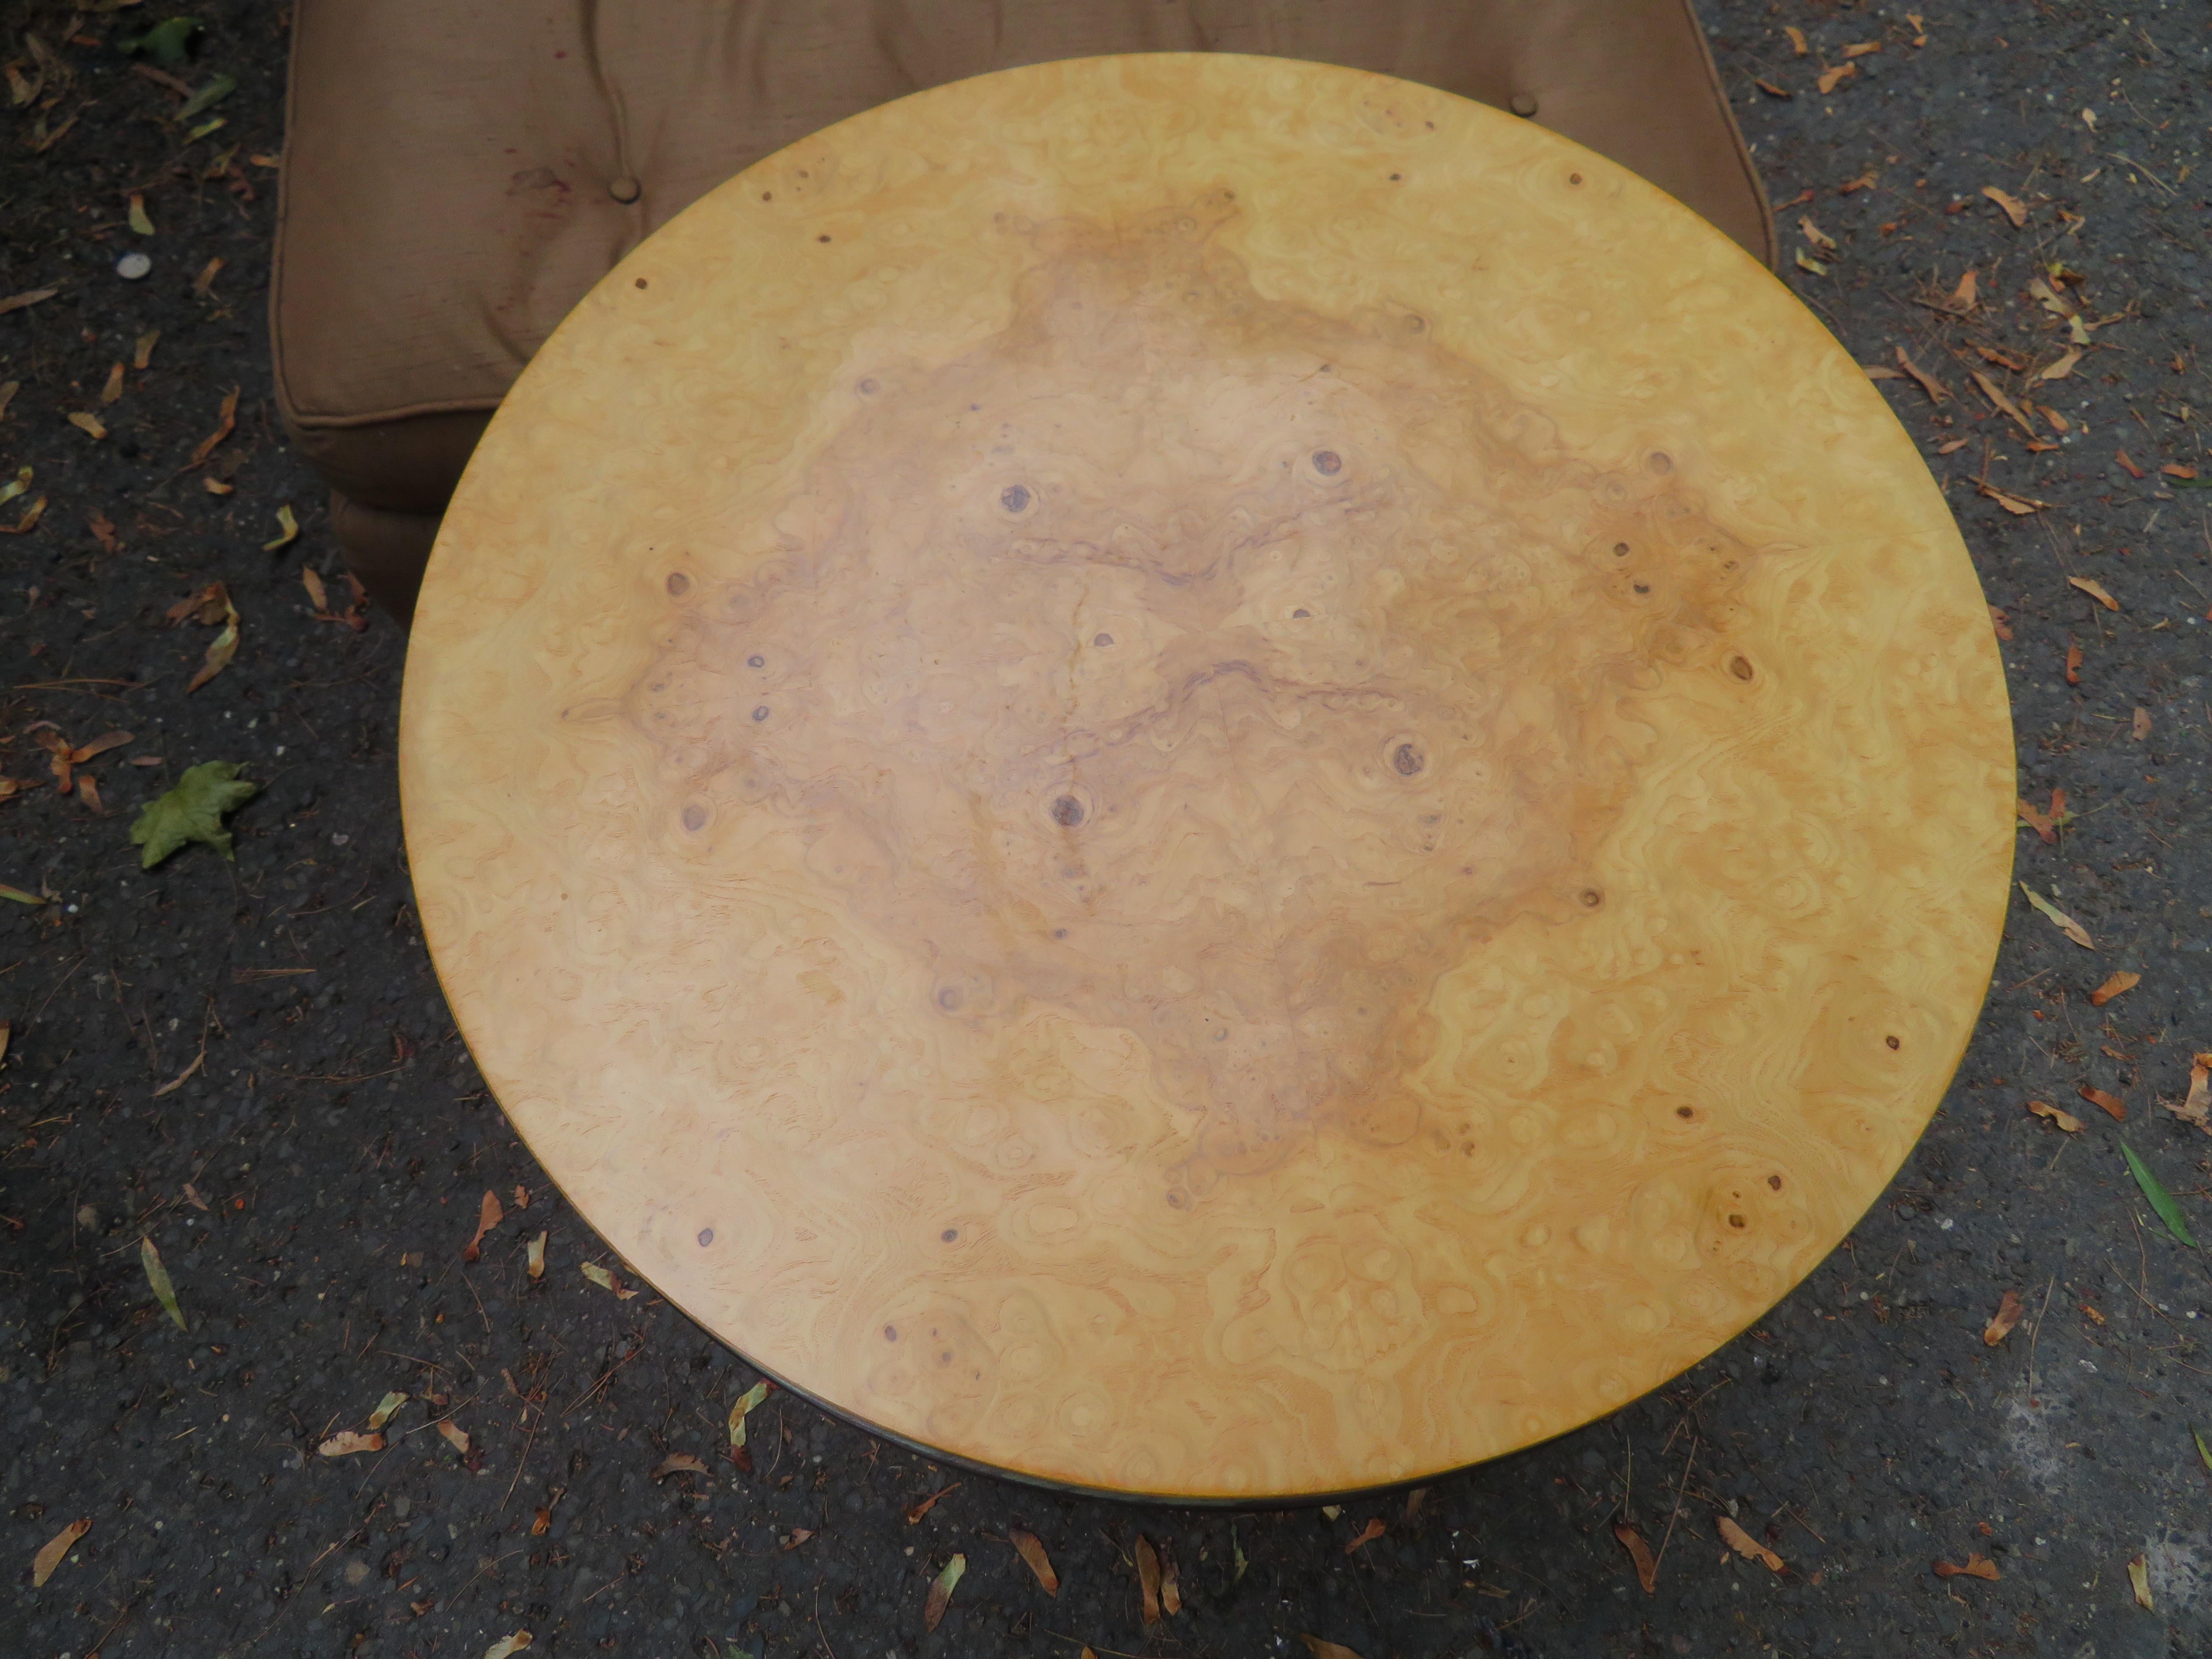 henredon drum table